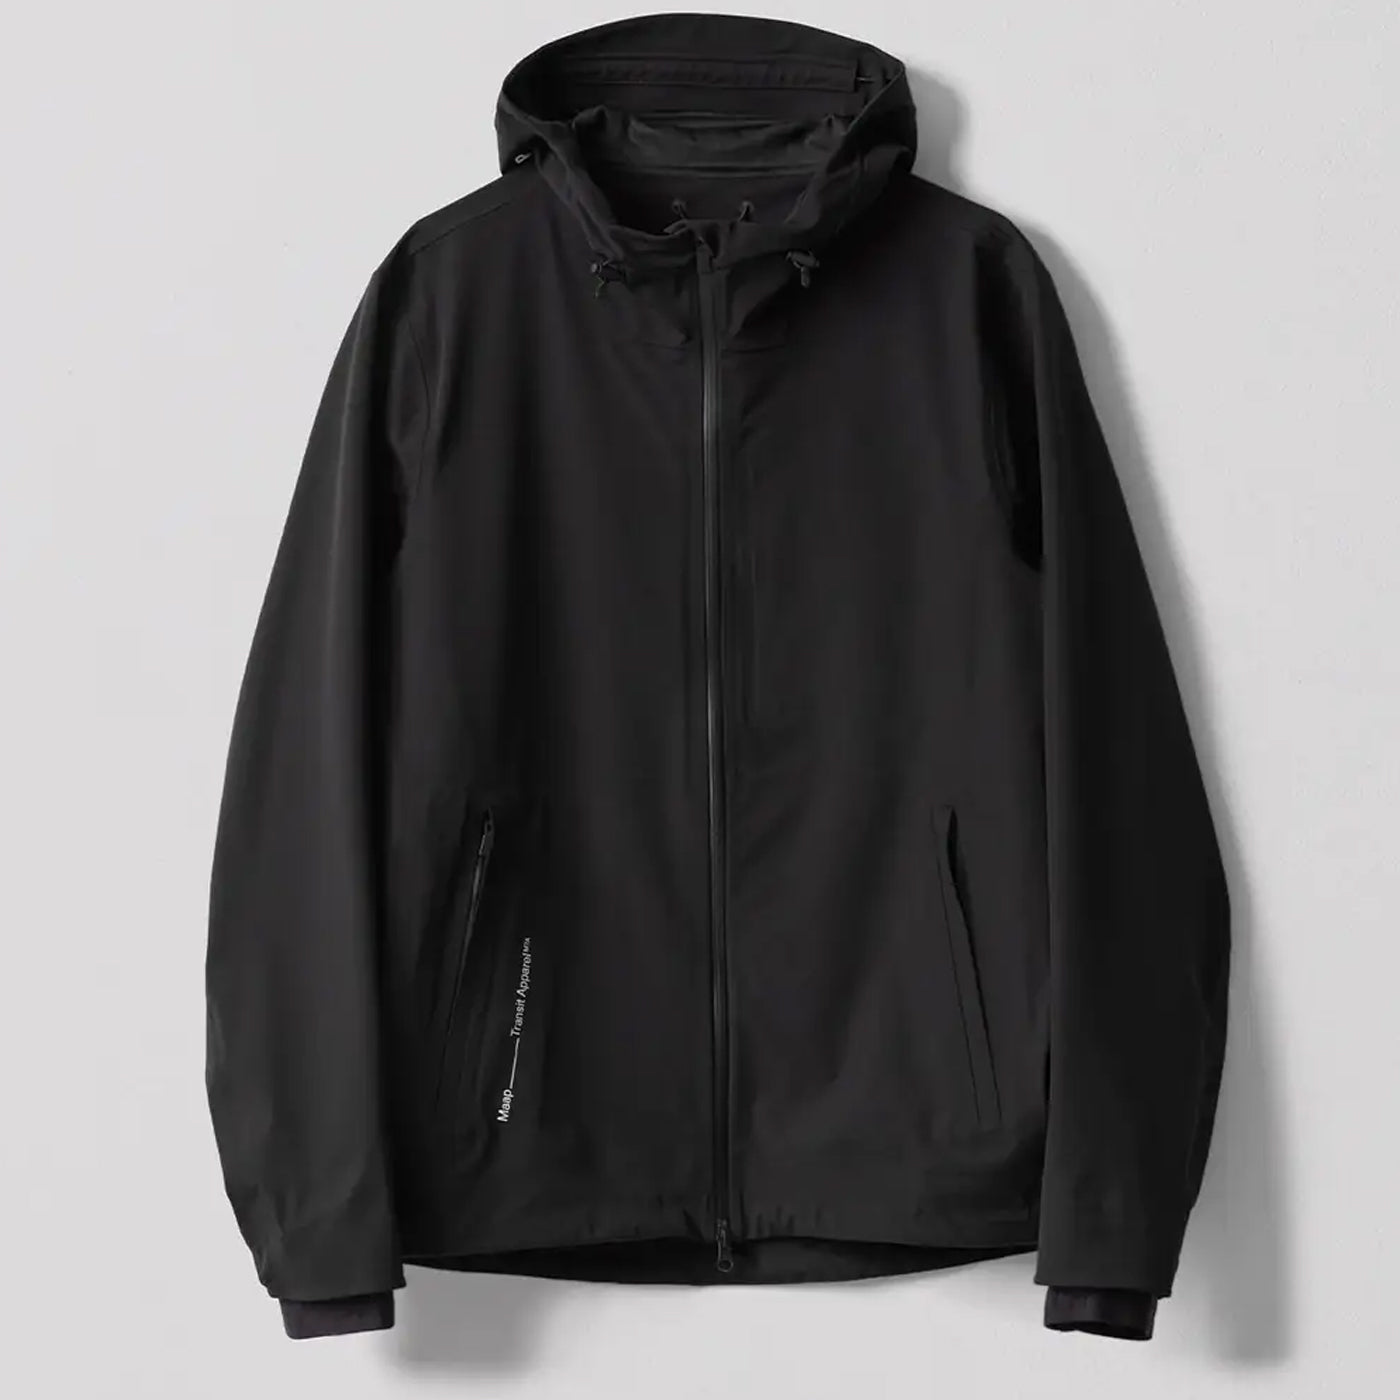 Maap Roam Jacket 2.0 jacket Black – All4cycling